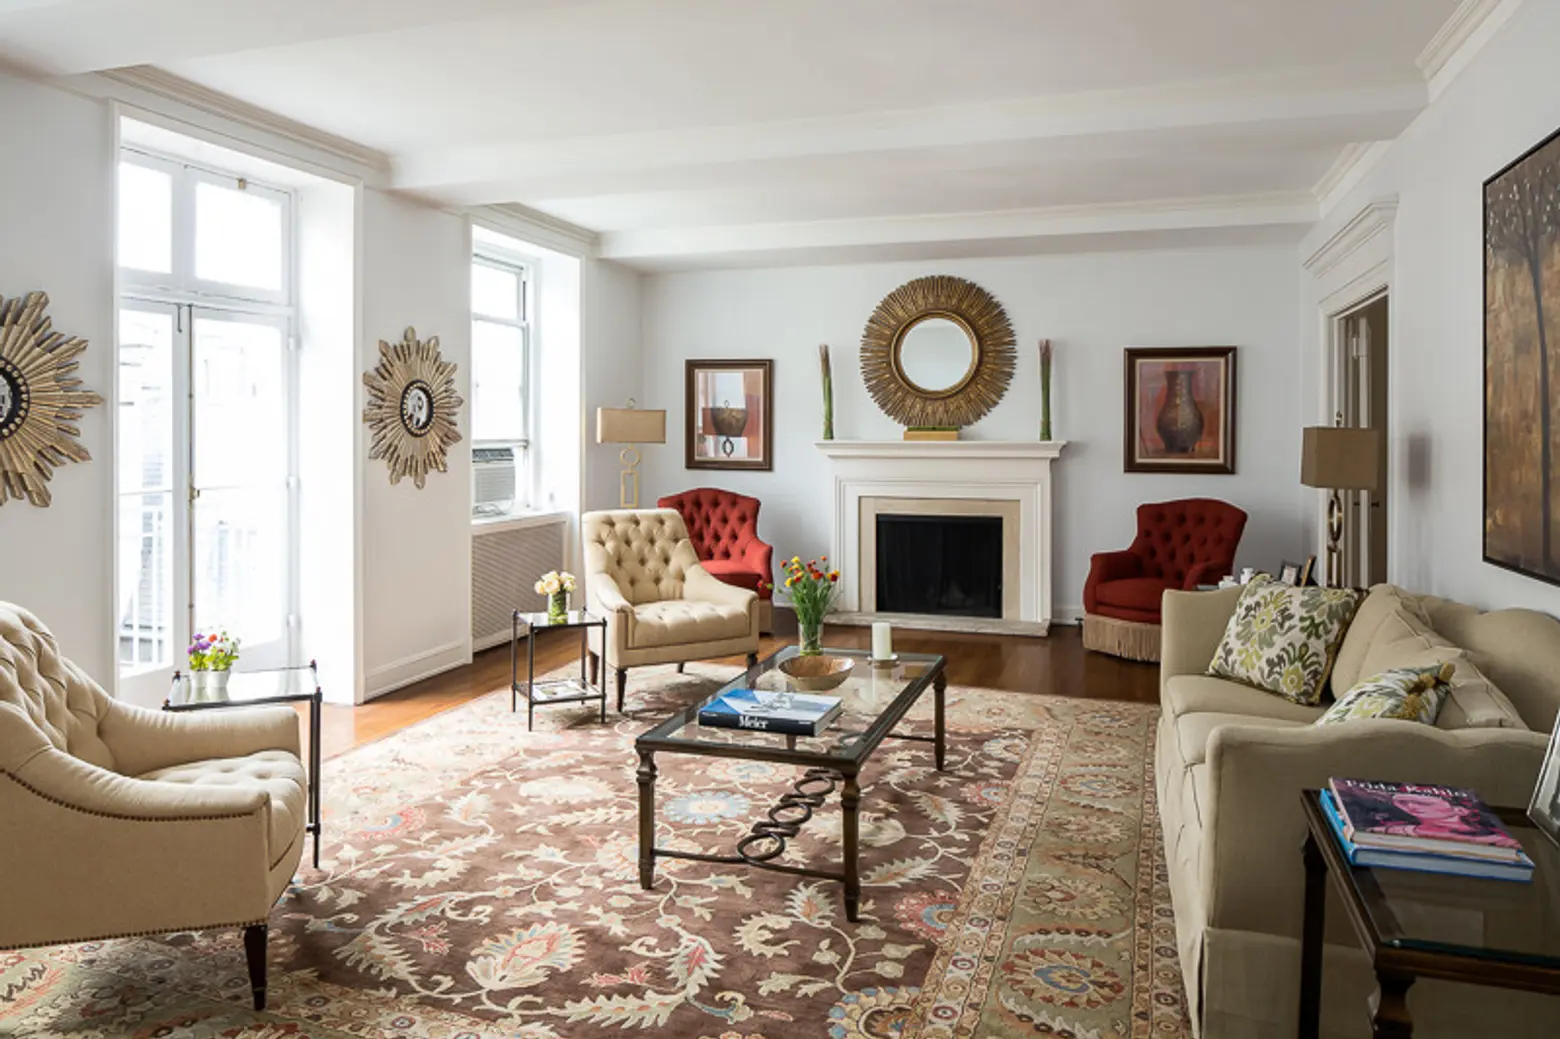 Debra Messing Buys $5.5M Upper East Side Apartment